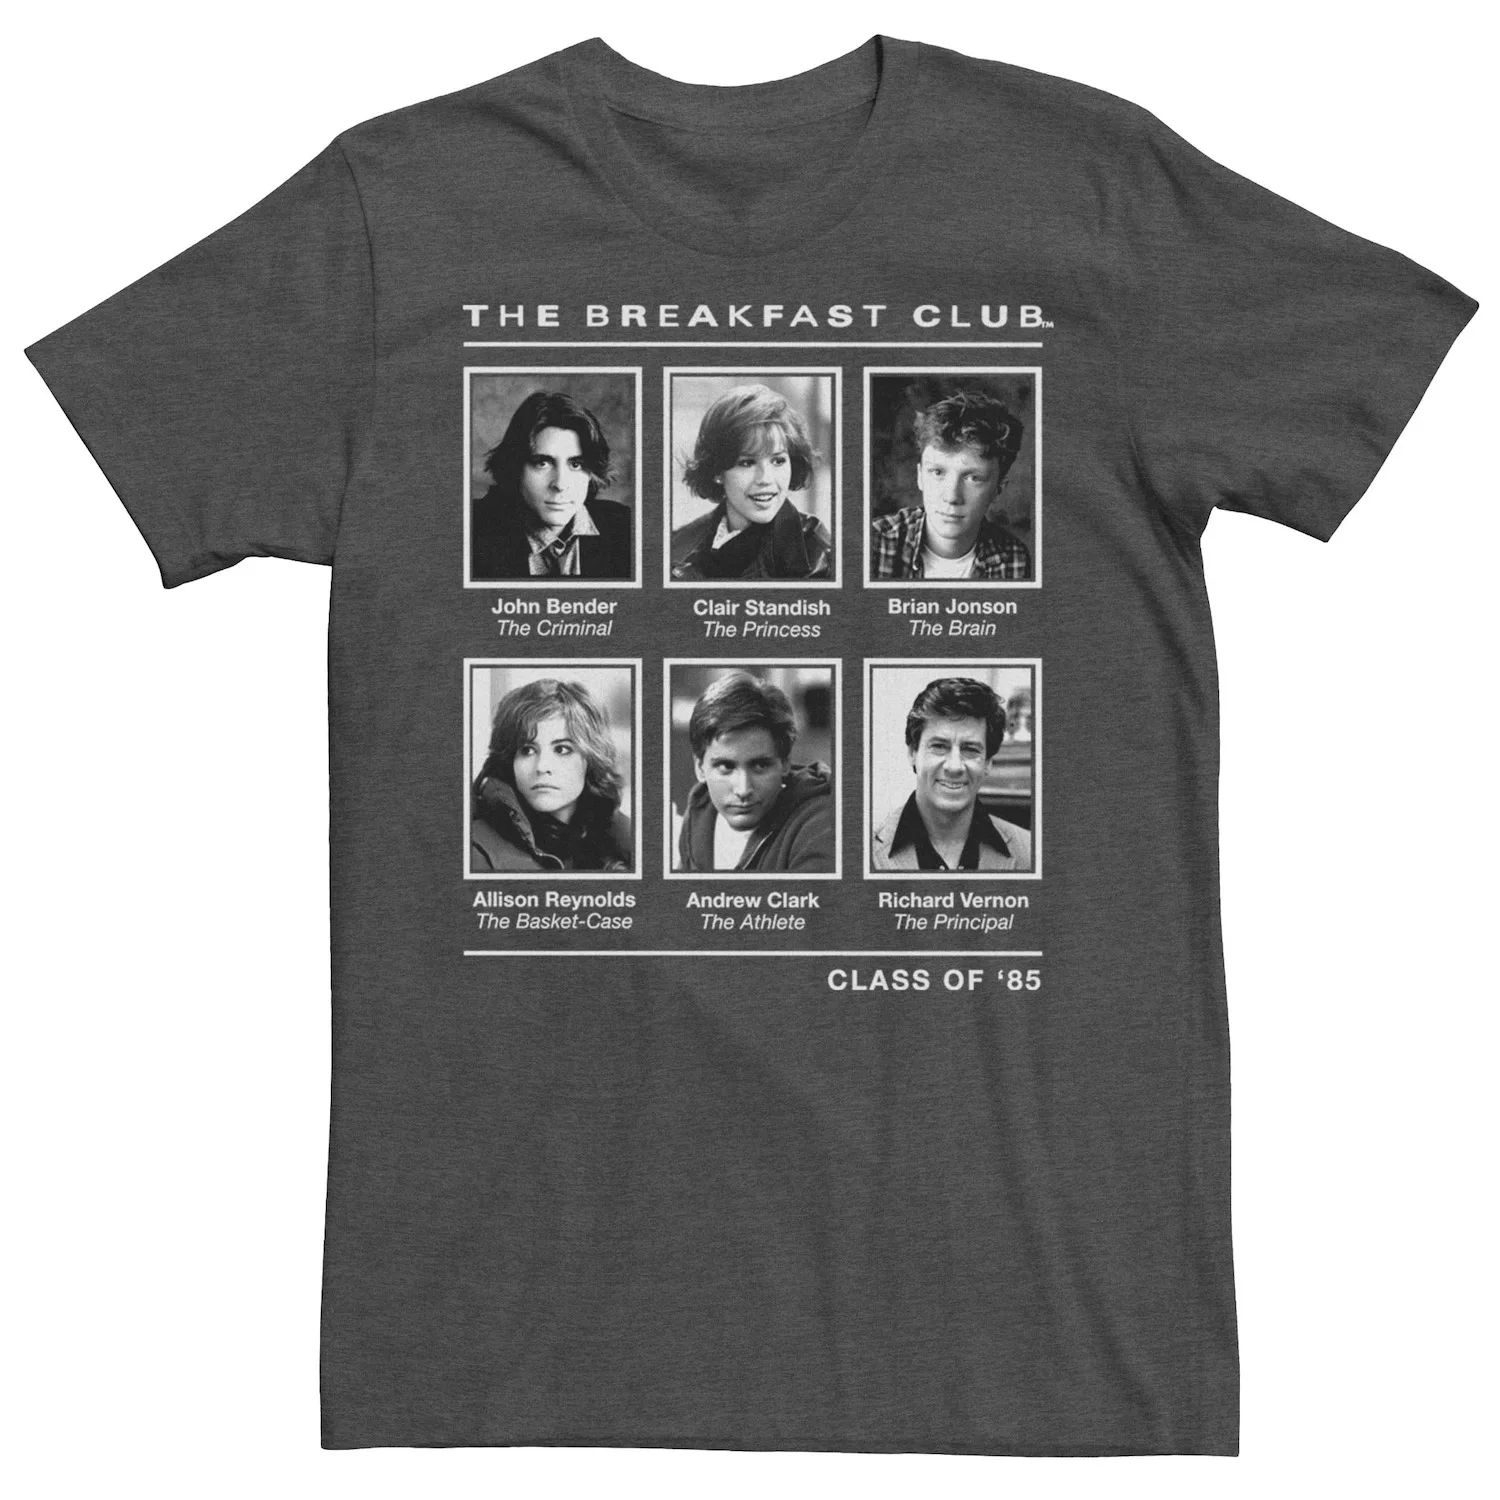 Мужская футболка с графическим рисунком «Breakfast Club Year Book Club Photos» Licensed Character мужская футболка с рисунком и рисунком breakfast club licensed character